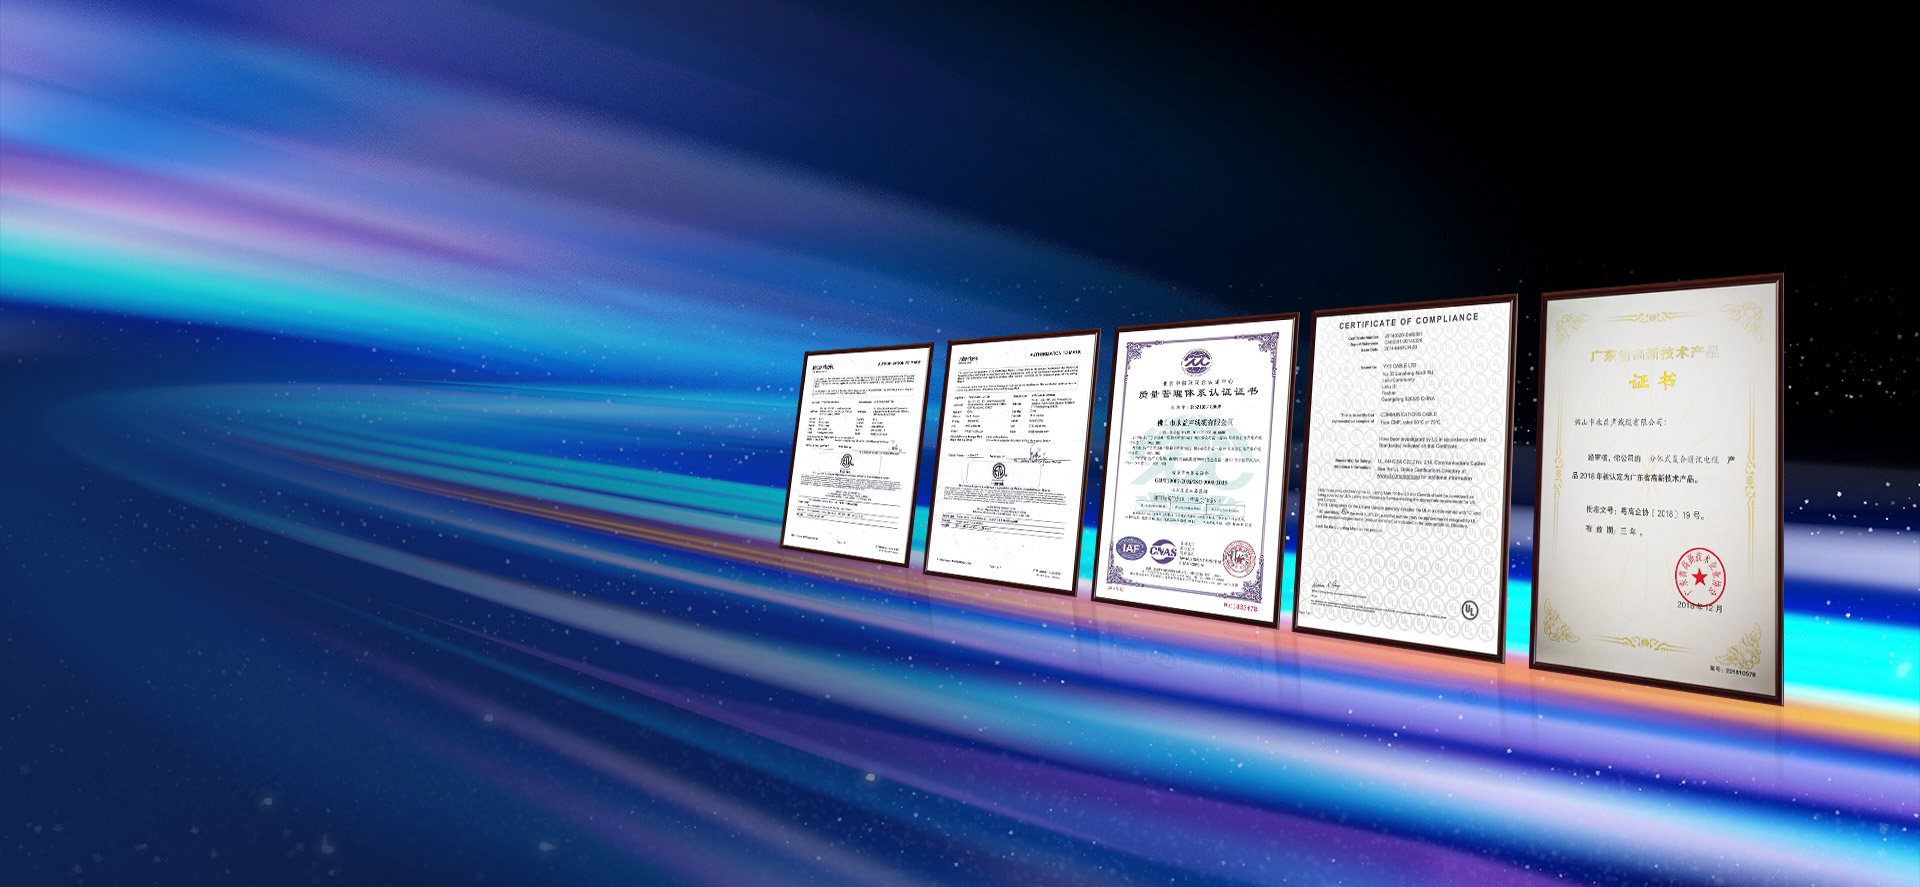 Numerous certifications